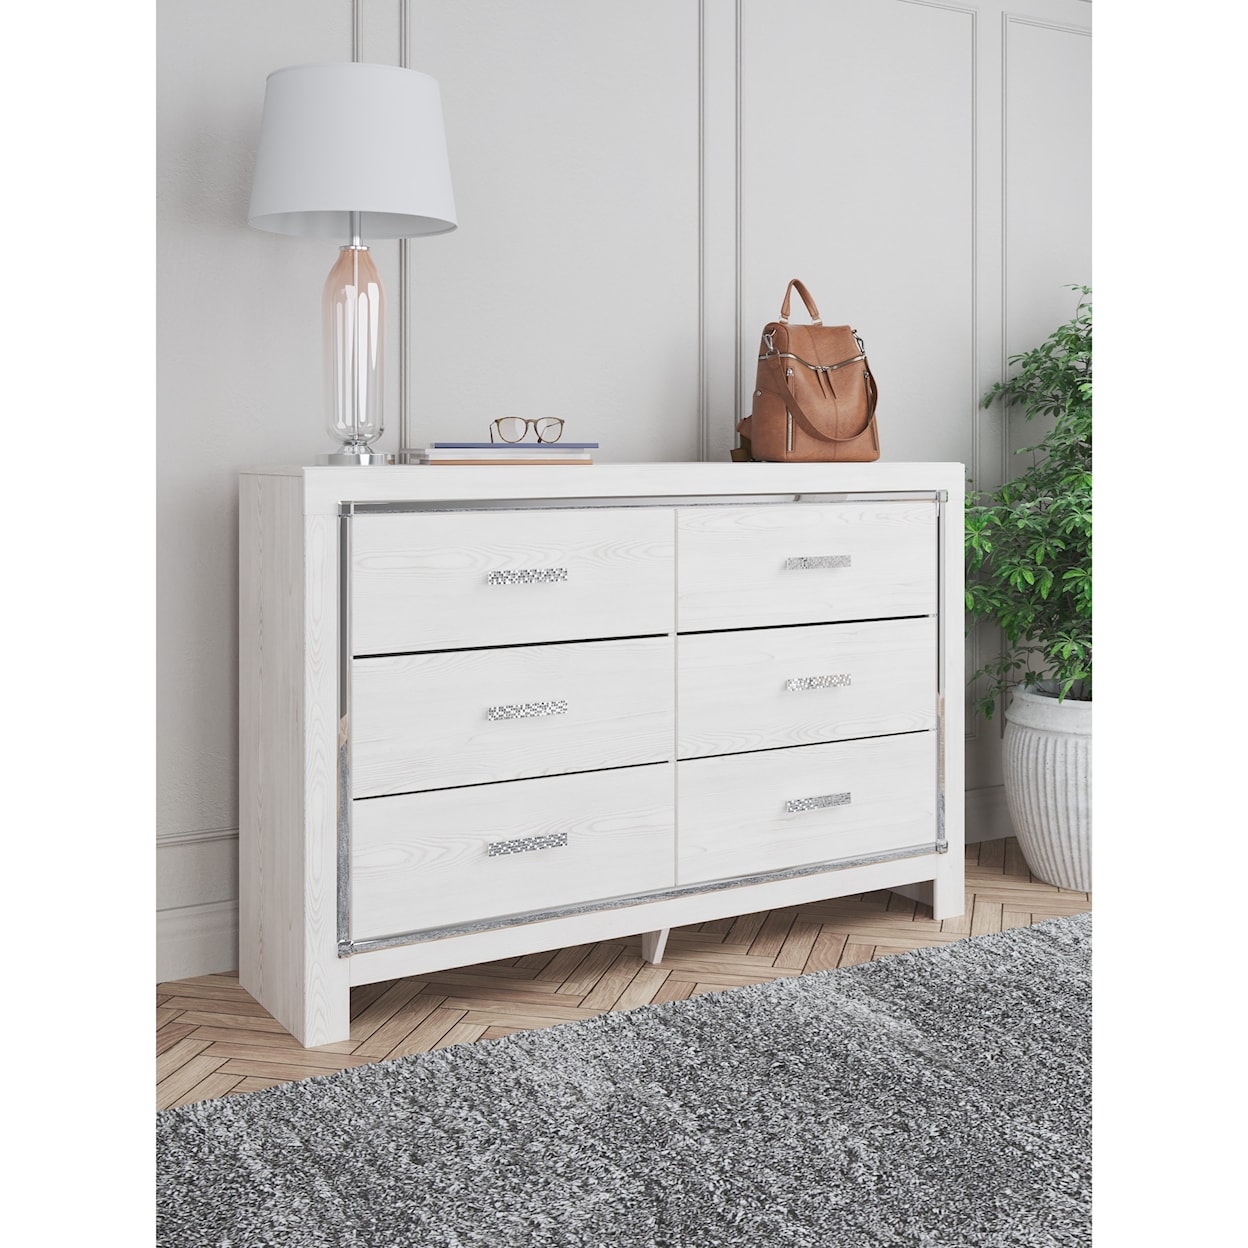 Ashley Furniture Signature Design Altyra Dresser